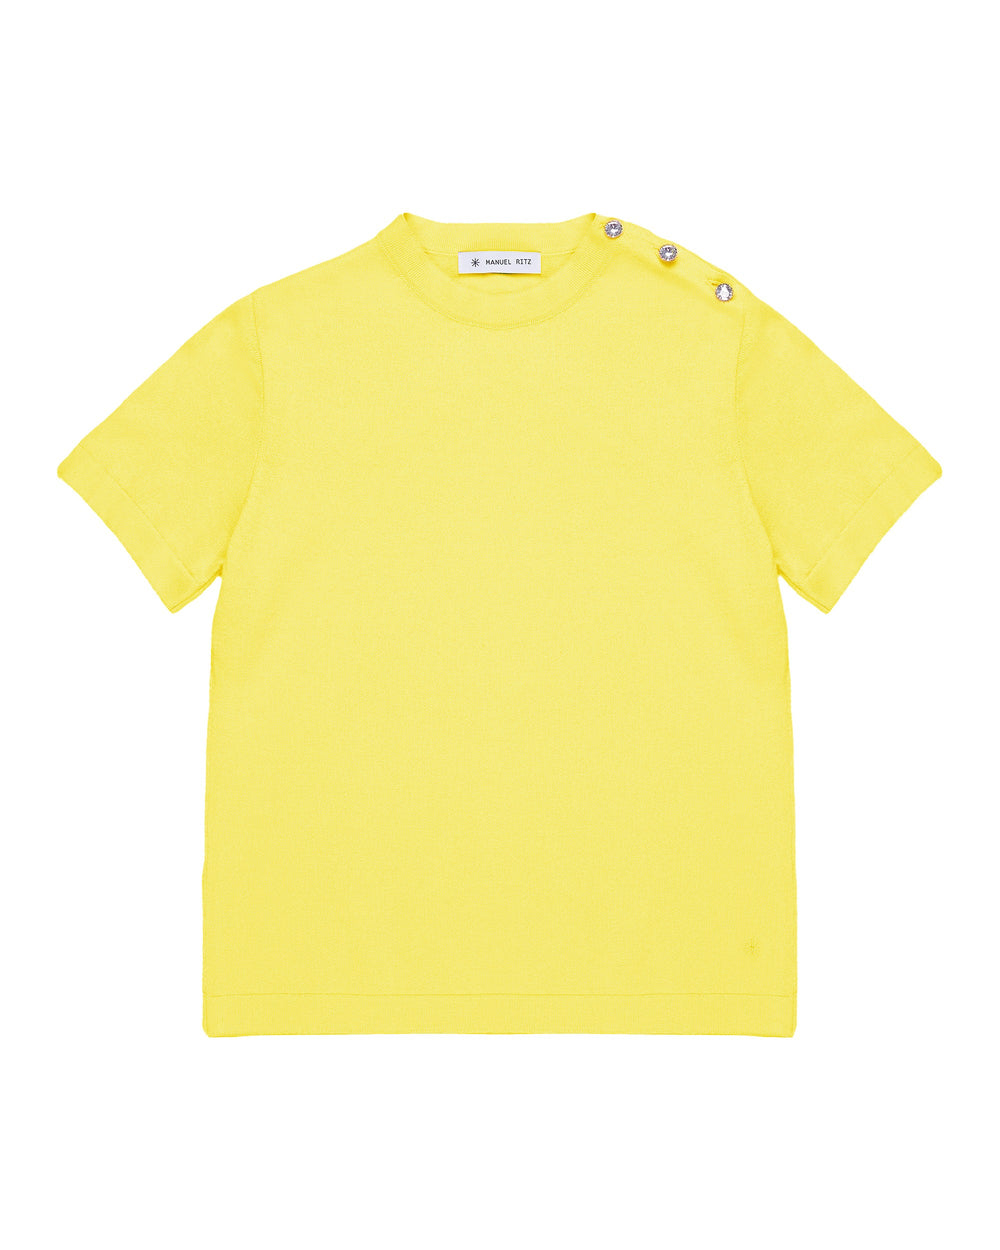 yellow jewel detail cotton jersey